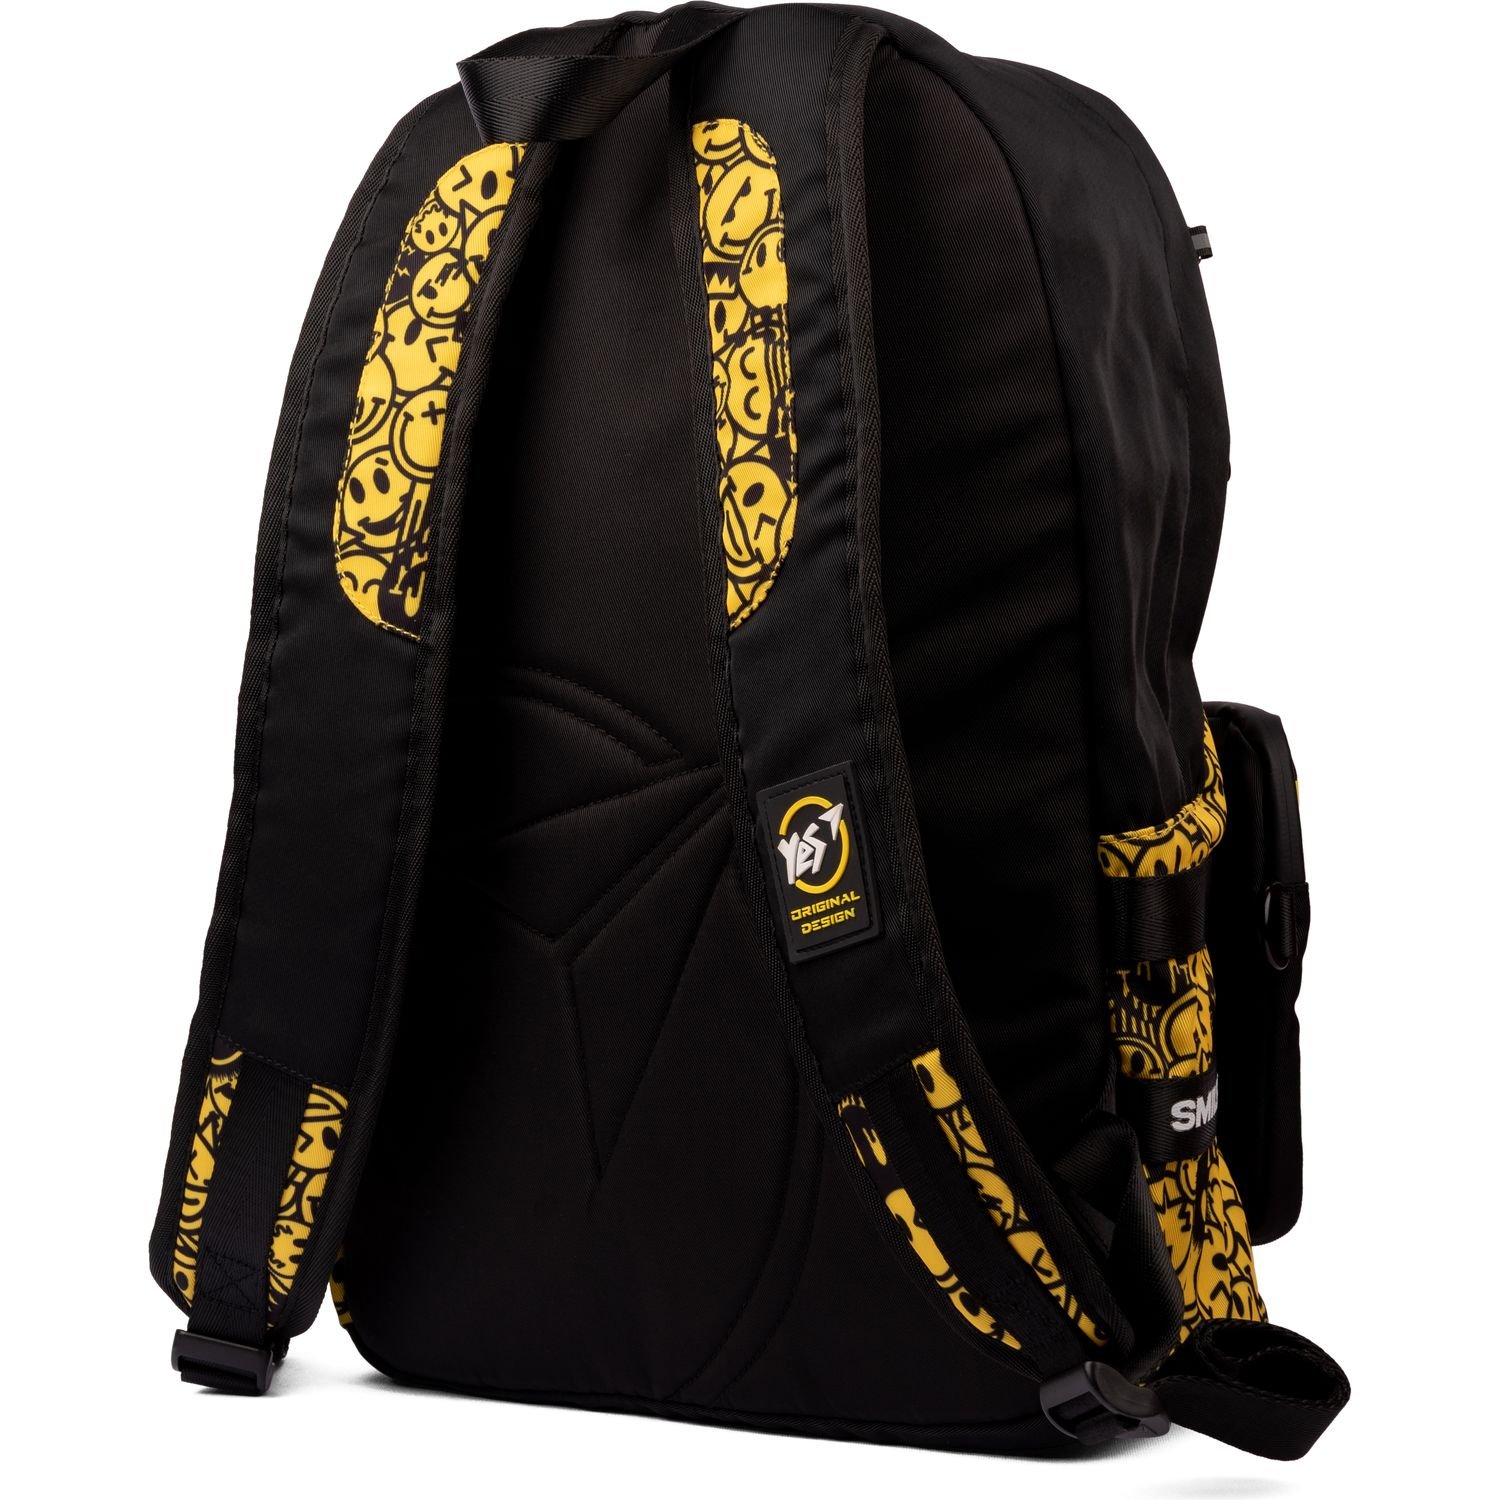 Рюкзак Yes T-137 Smiley World, черный с желтым (559483) - фото 3